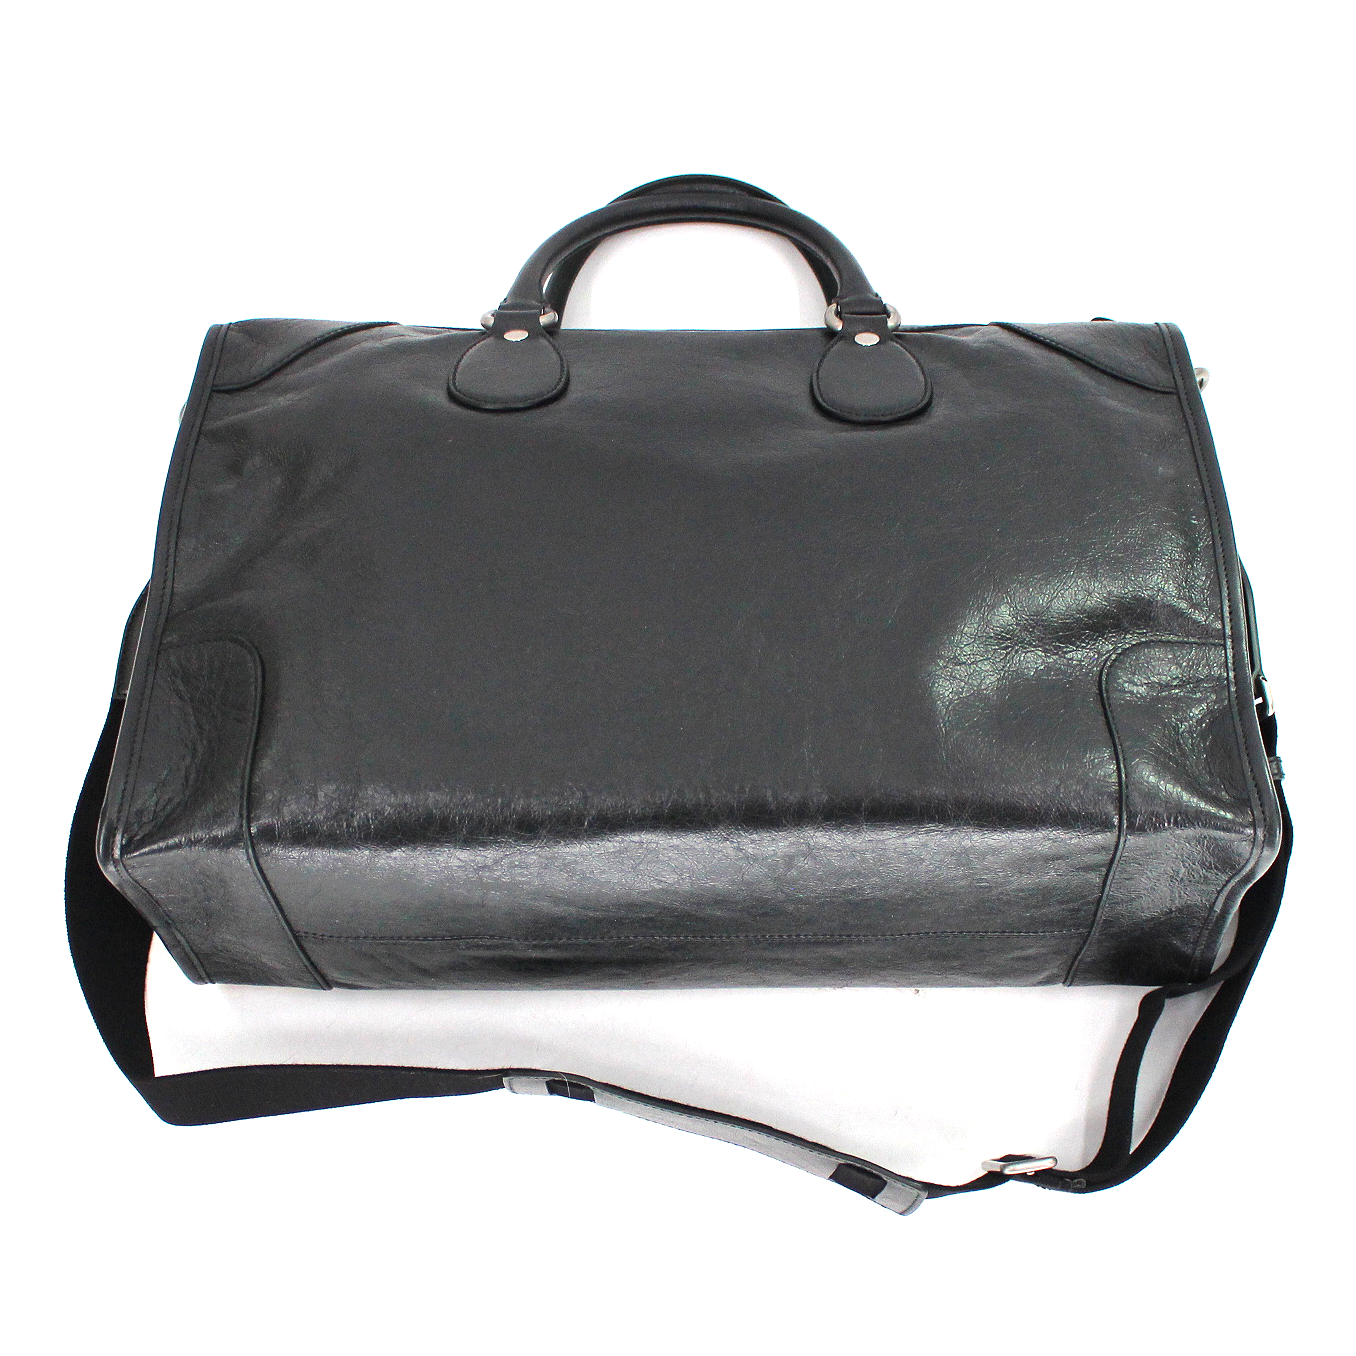 Gucci Leather Duffle Bag